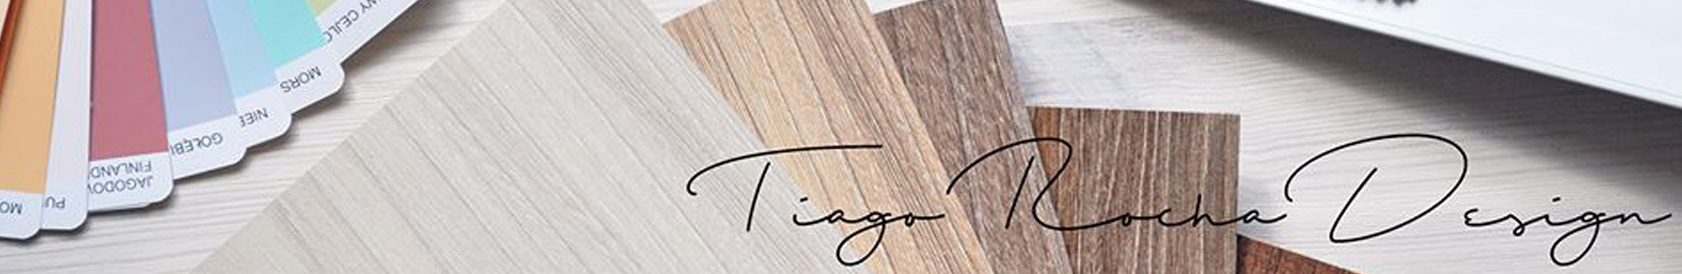 Tiago Rocha Design's profile banner